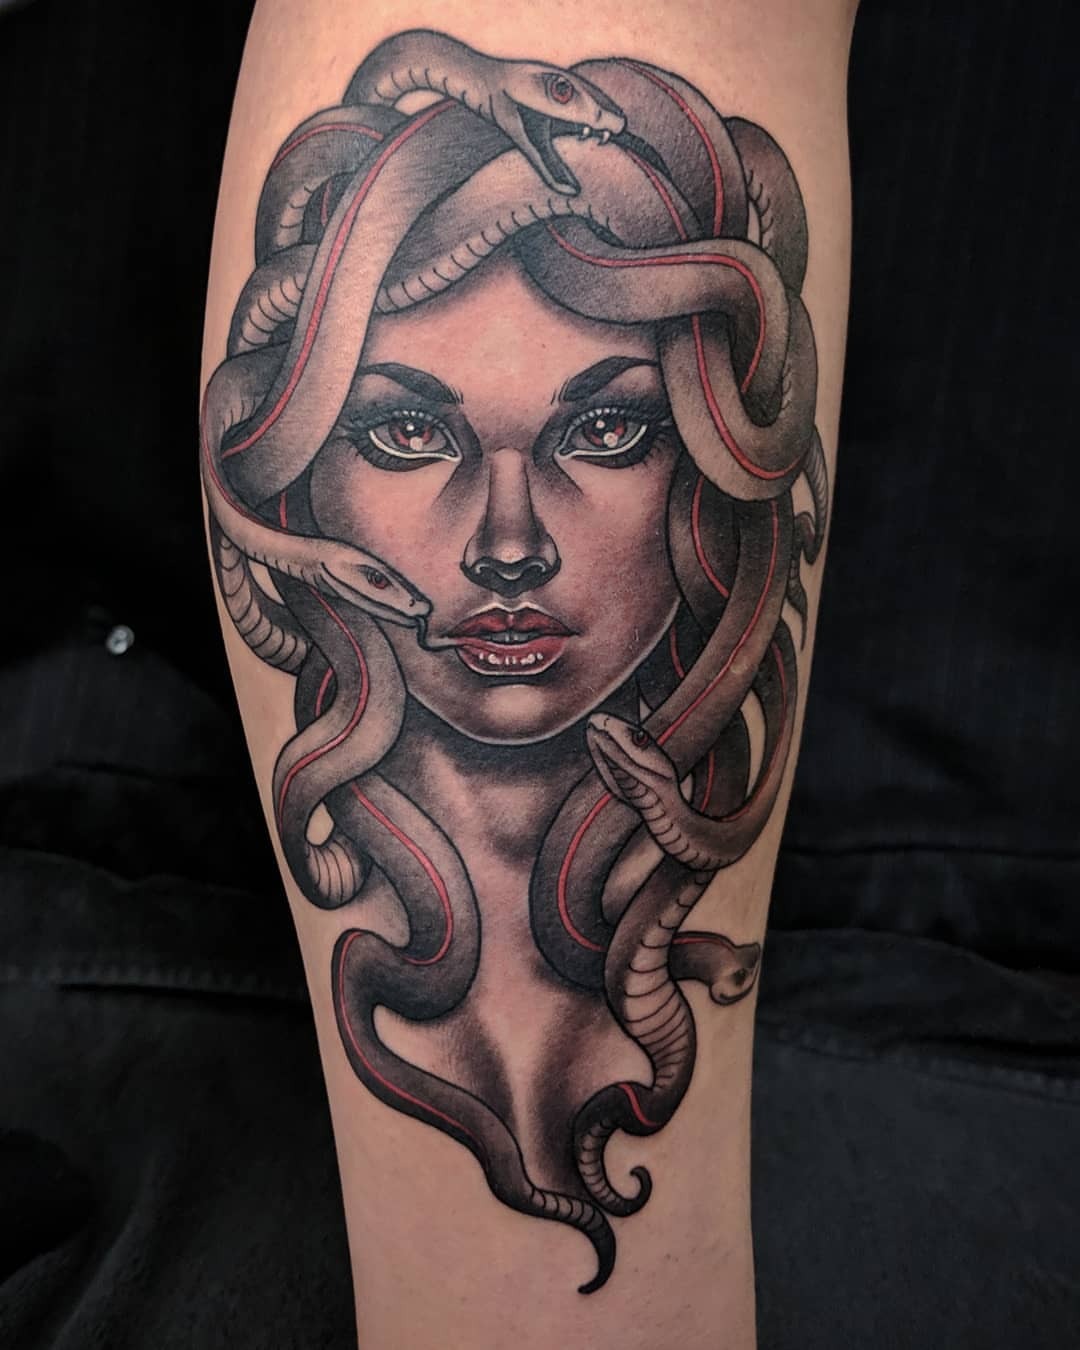 MEDUSA - Snake Head Girl from Greek Myth Tattoo Mouse Pad | Zazzle